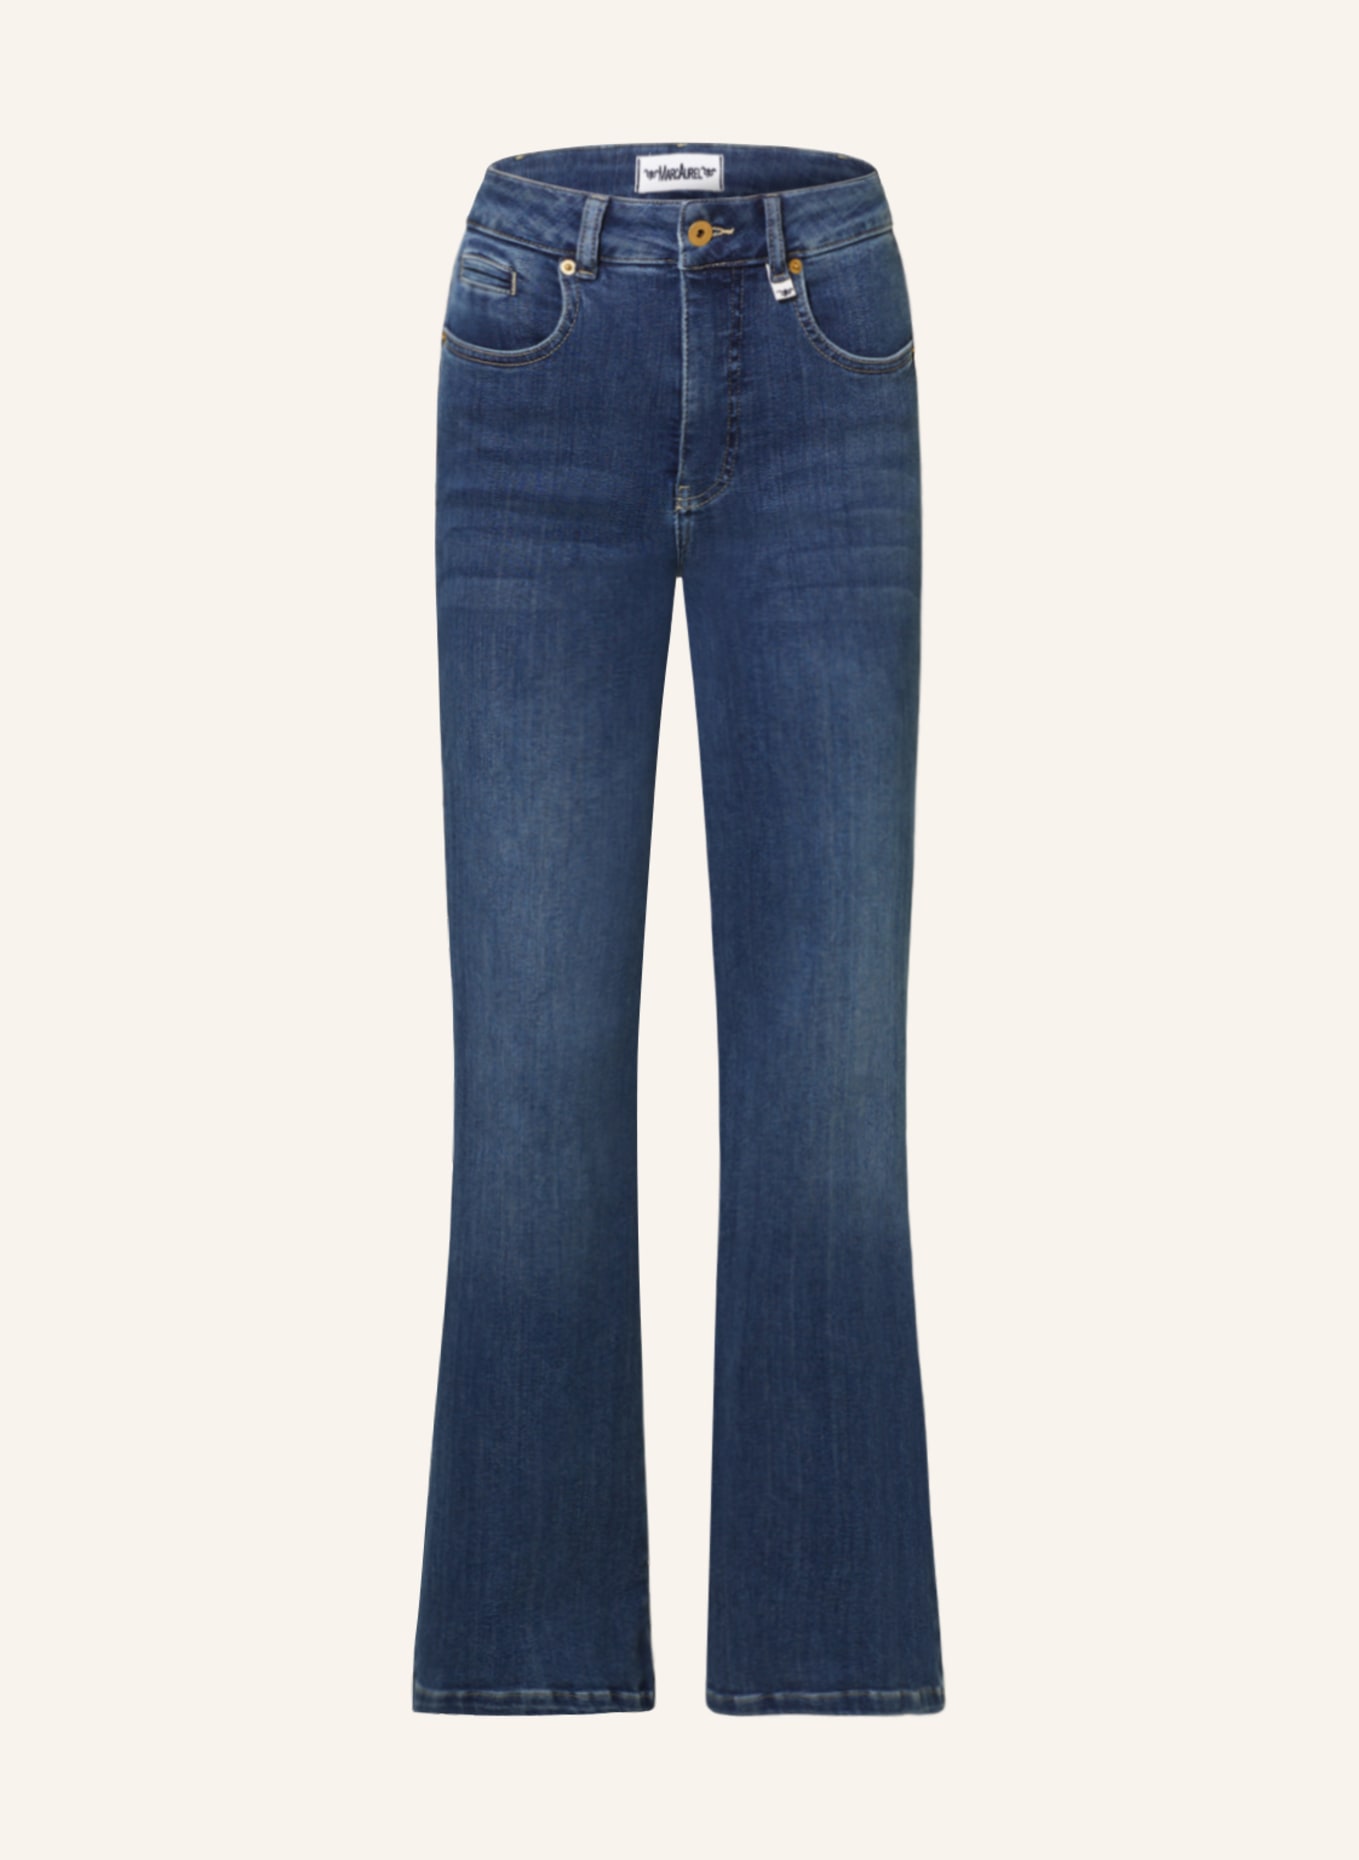 MARC AUREL Jeans, Farbe: 13300 dark denim (Bild 1)